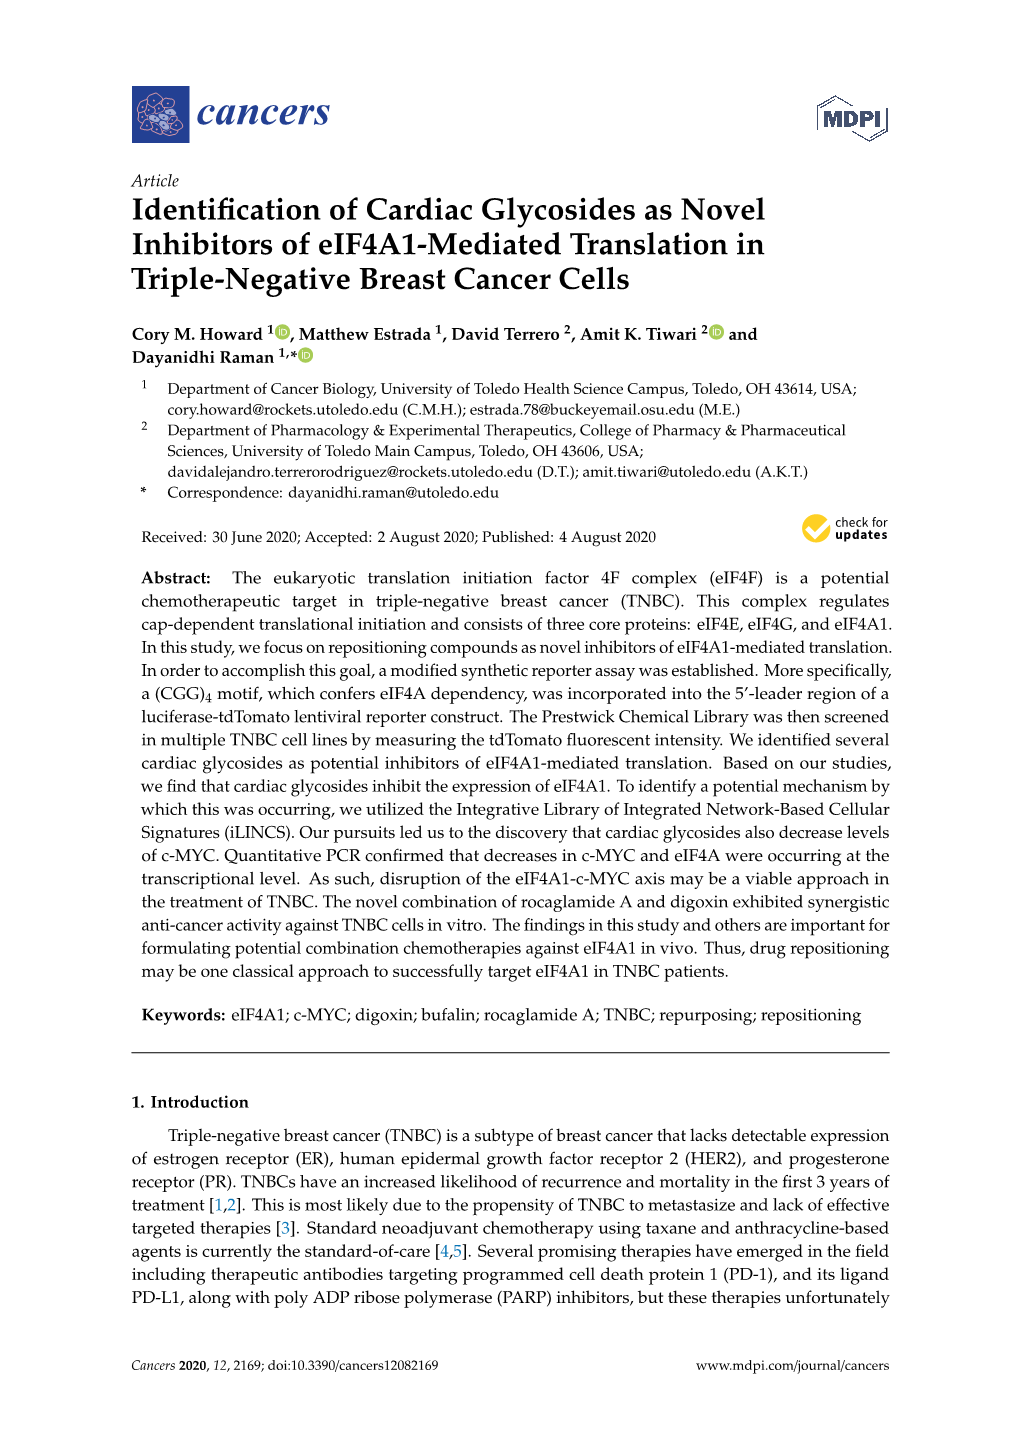 Identification of Cardiac Glycosides As Novel Inhibitors of Eif4a1